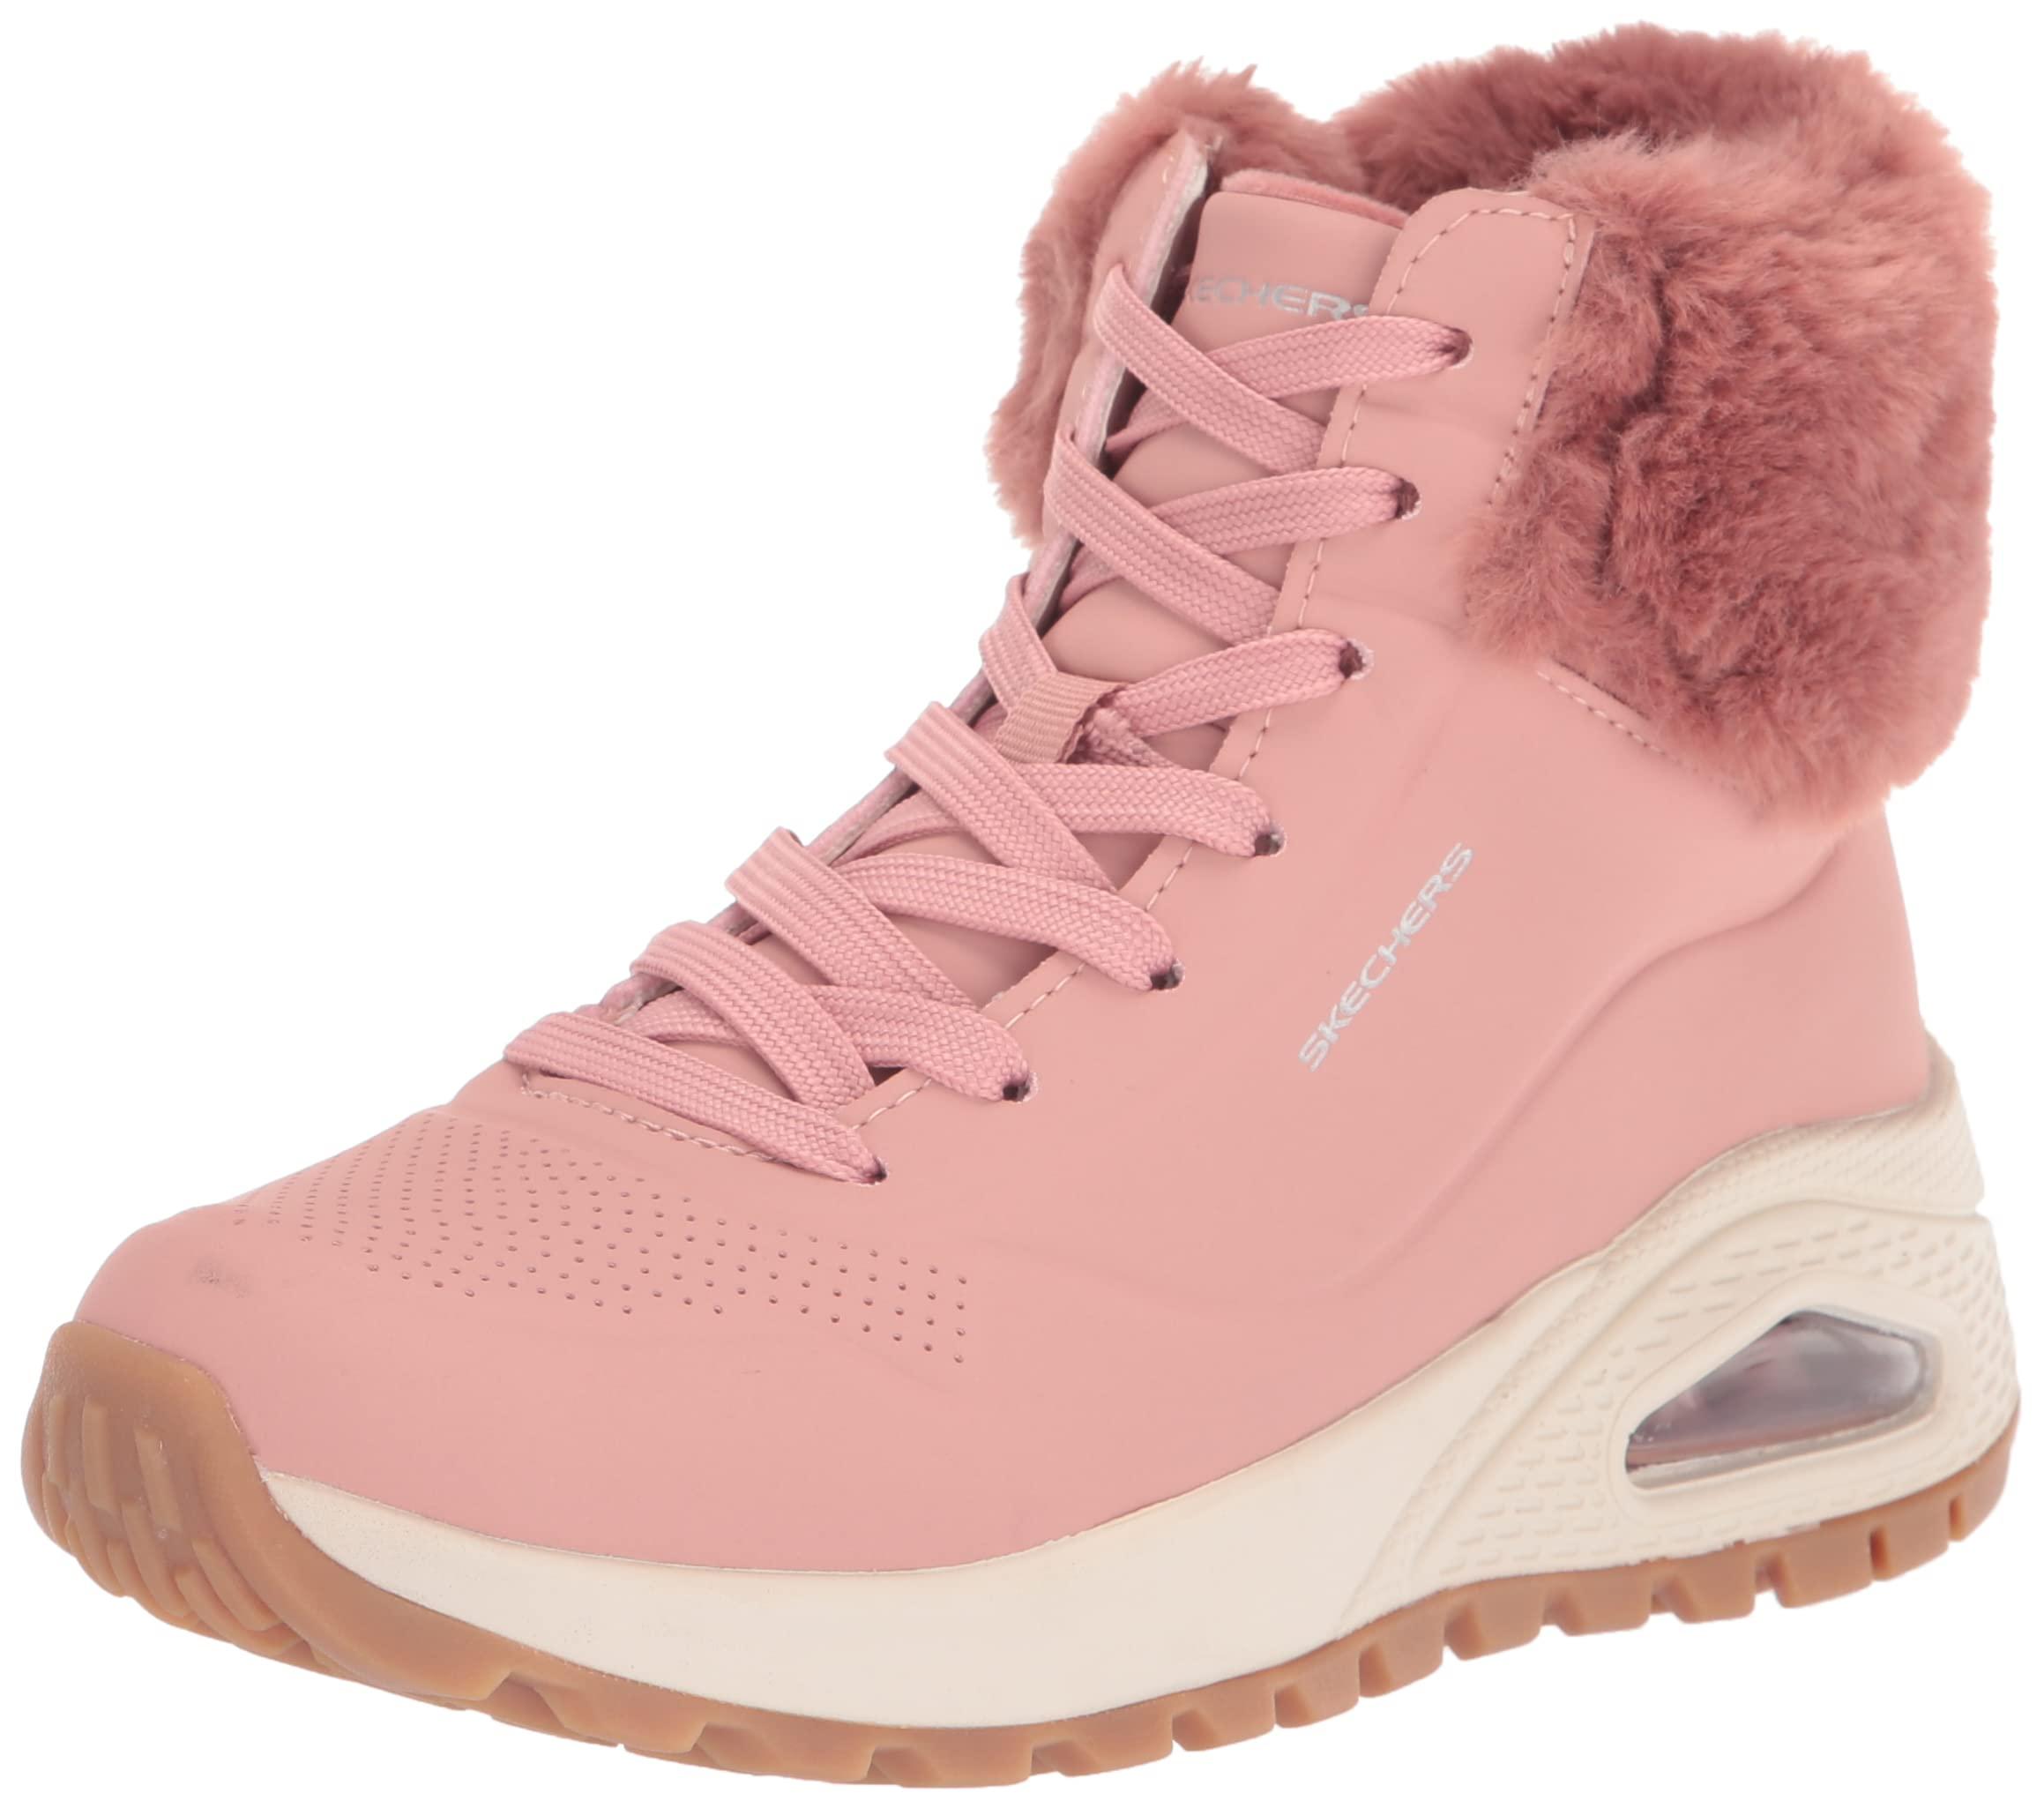 Tacón codicioso colateral Winter Boots Mujer, Pink, 38 EU Skechers | Lyst